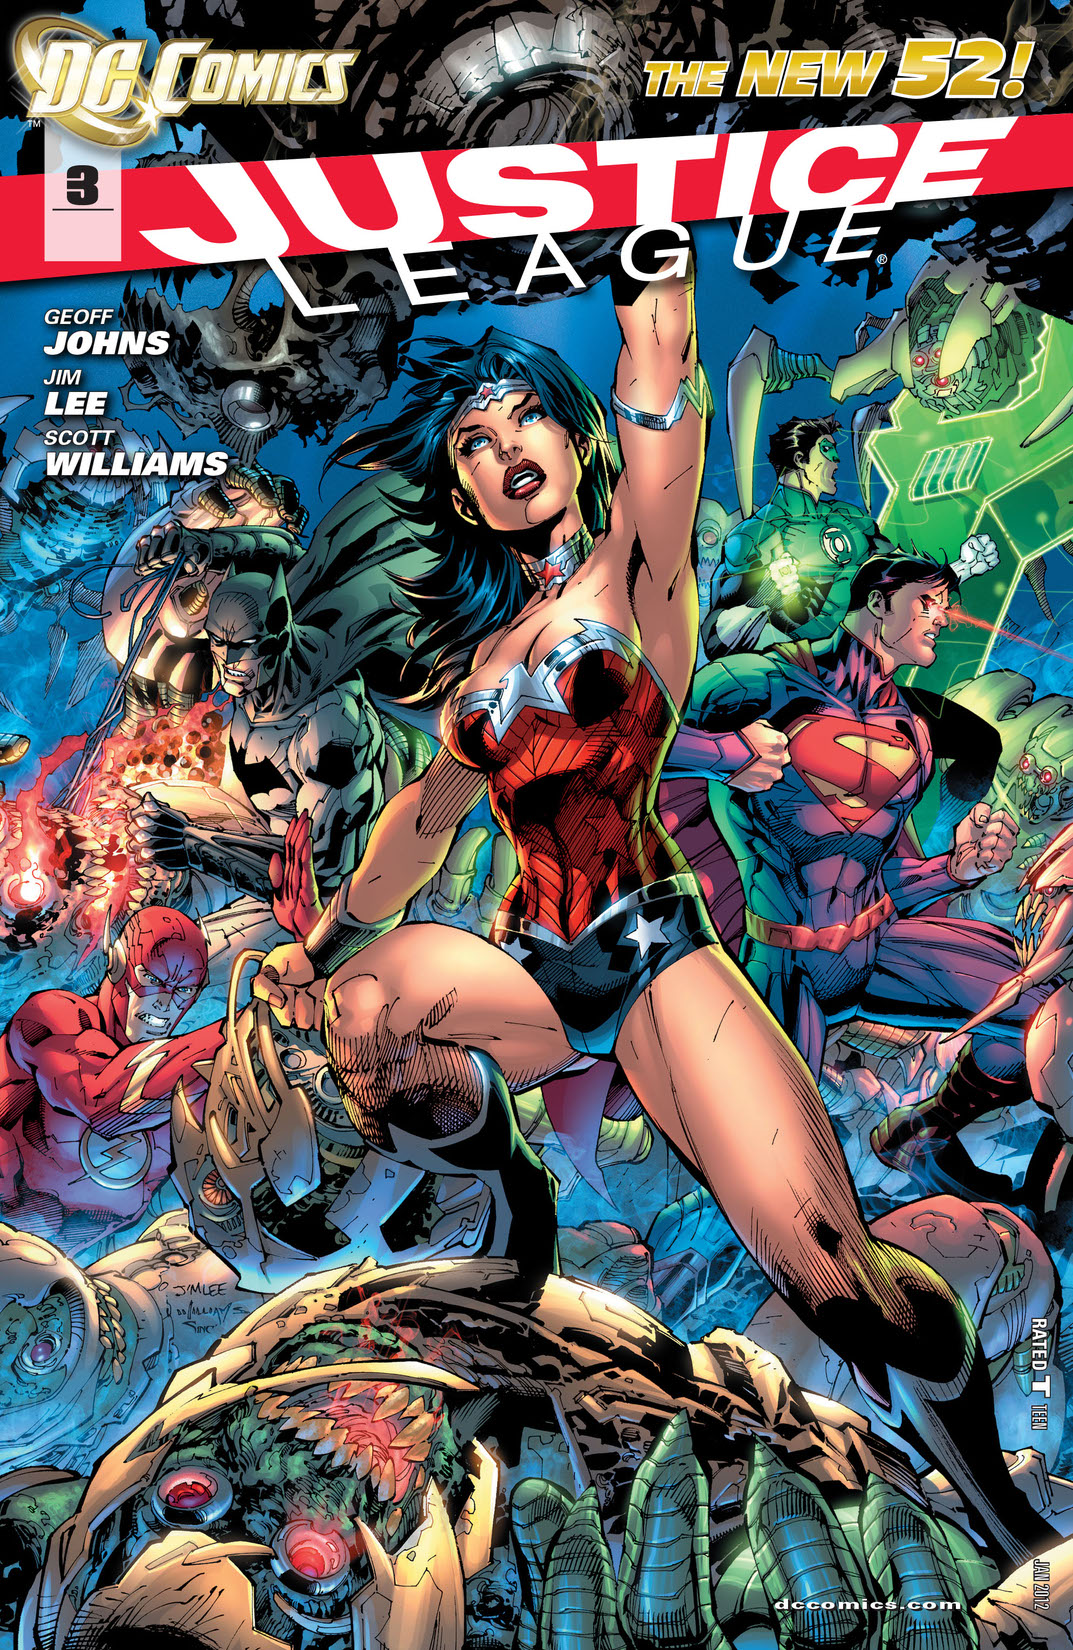 Justice League (2011-) #3 preview images